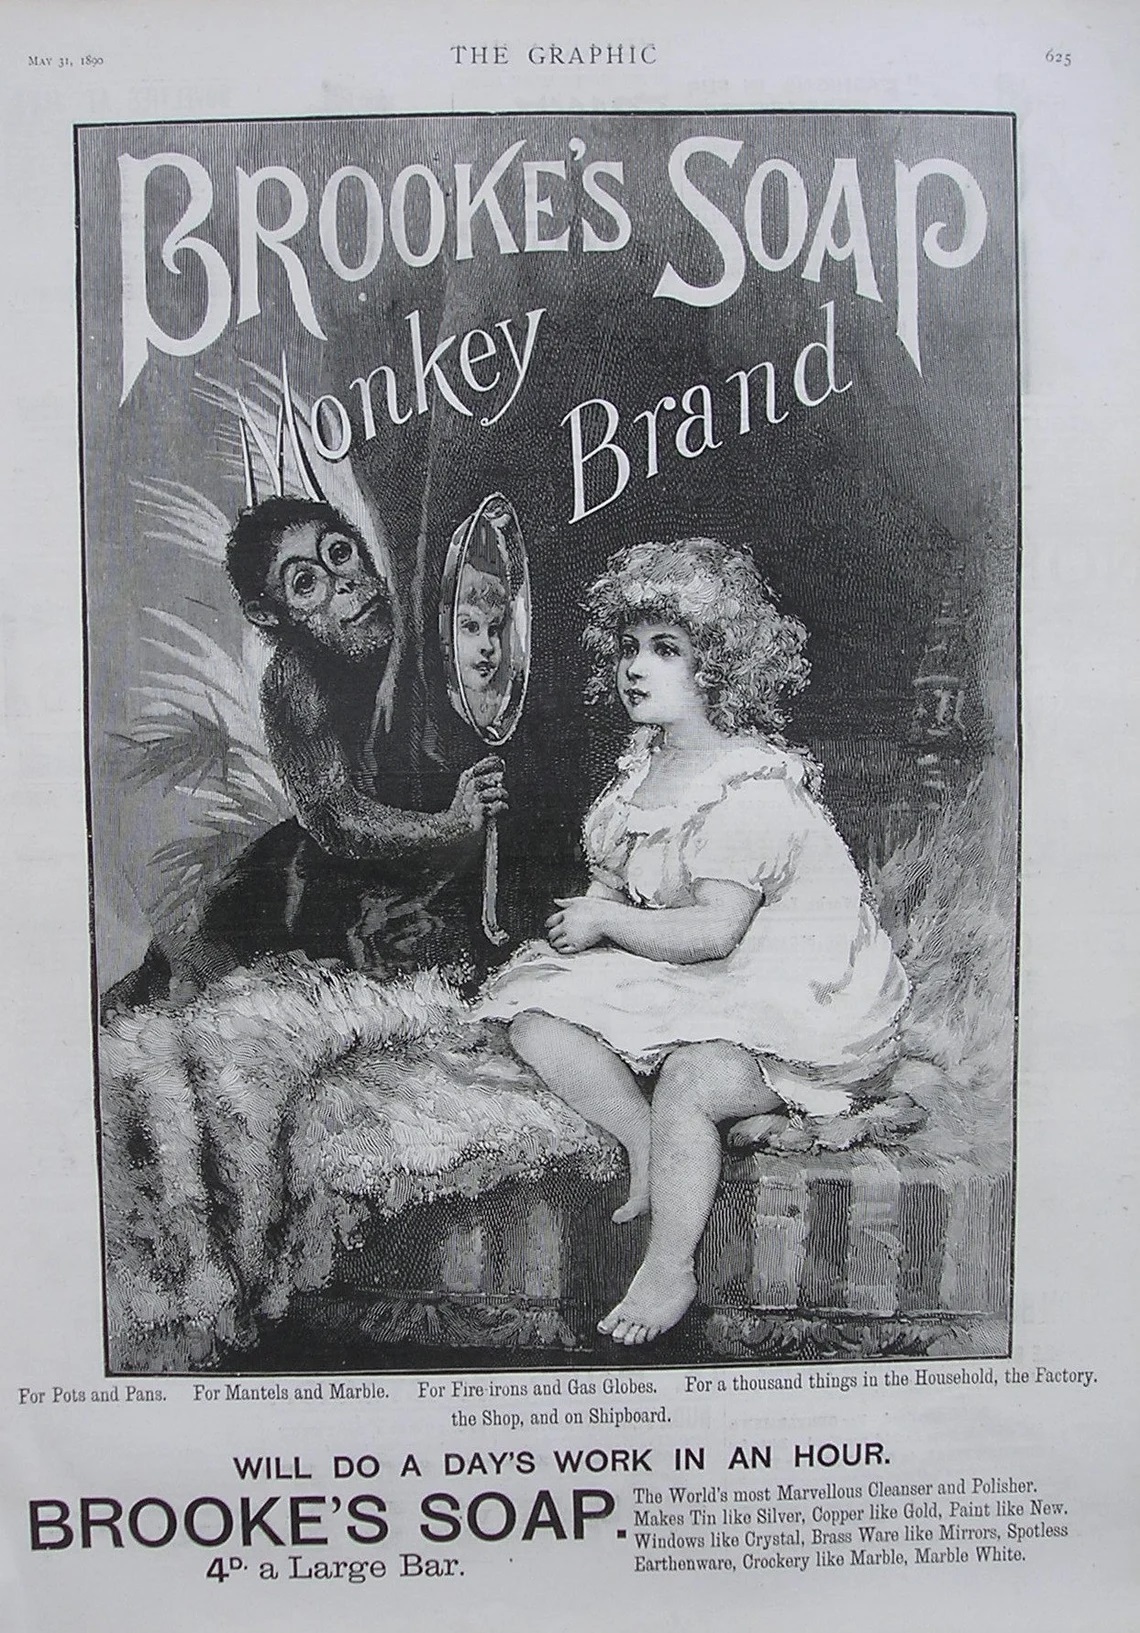 Brooke_s_Monkey_Brand_Soap magazine The Graphic du 31 may 1890